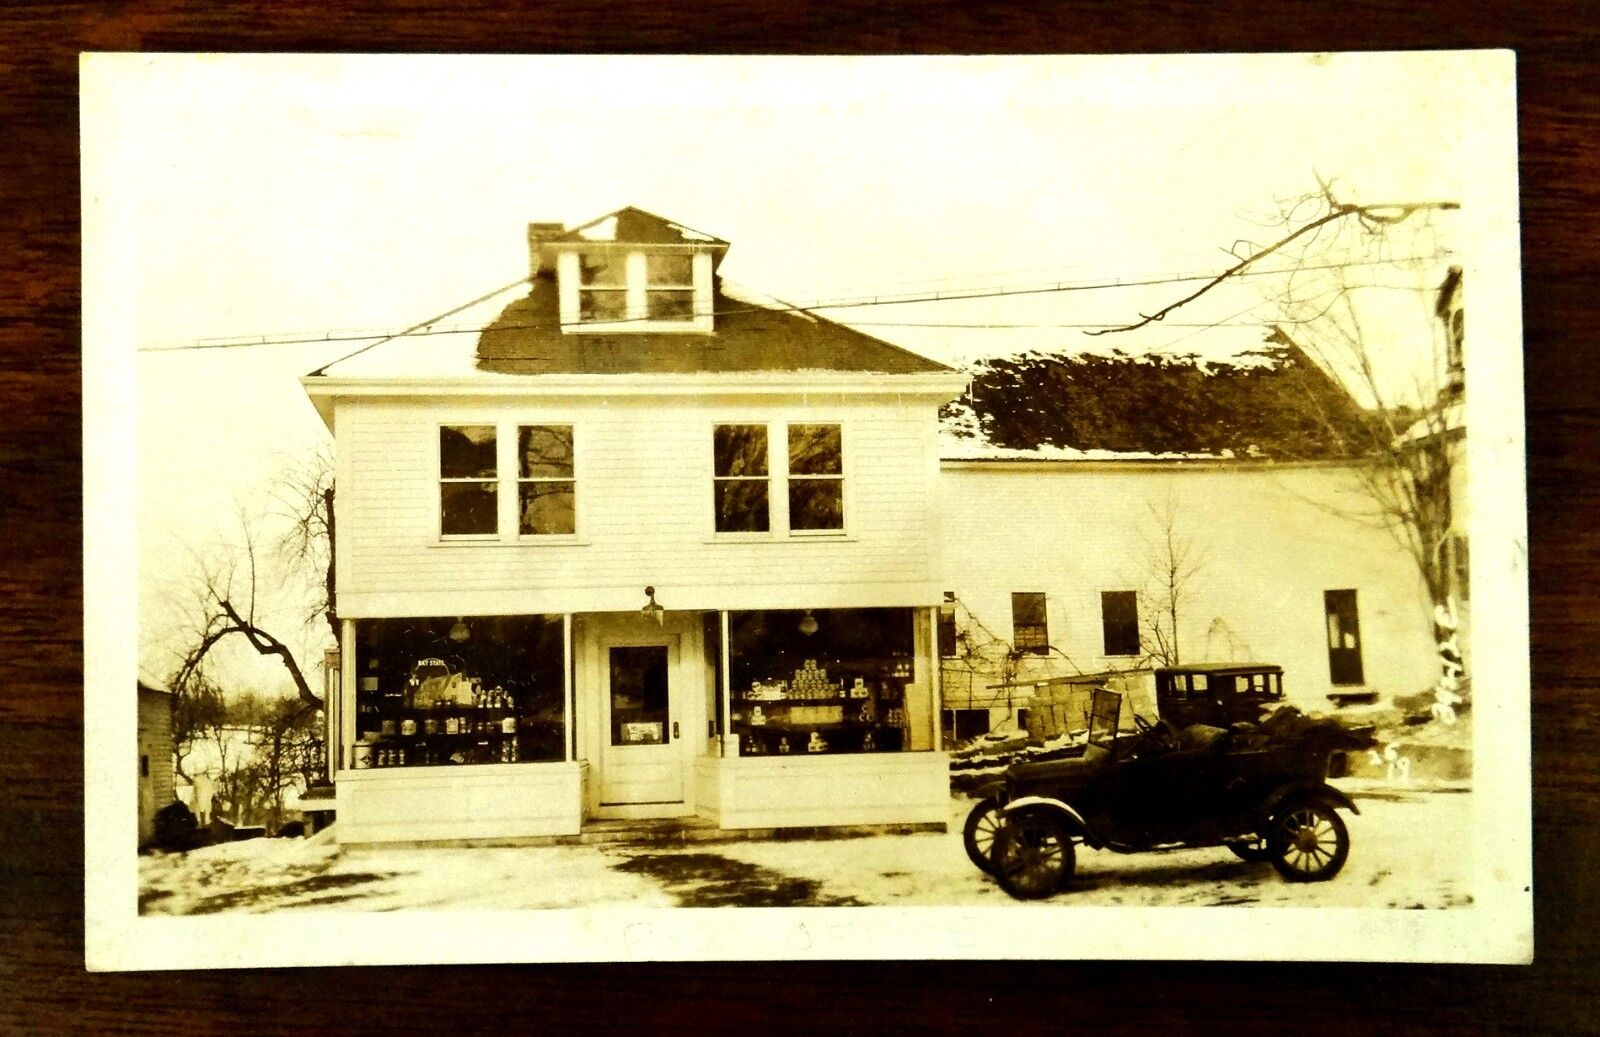 GROCERY DRY GOODS STORE Lunenburg MA Massachusetts Photo Postcard c.1920s